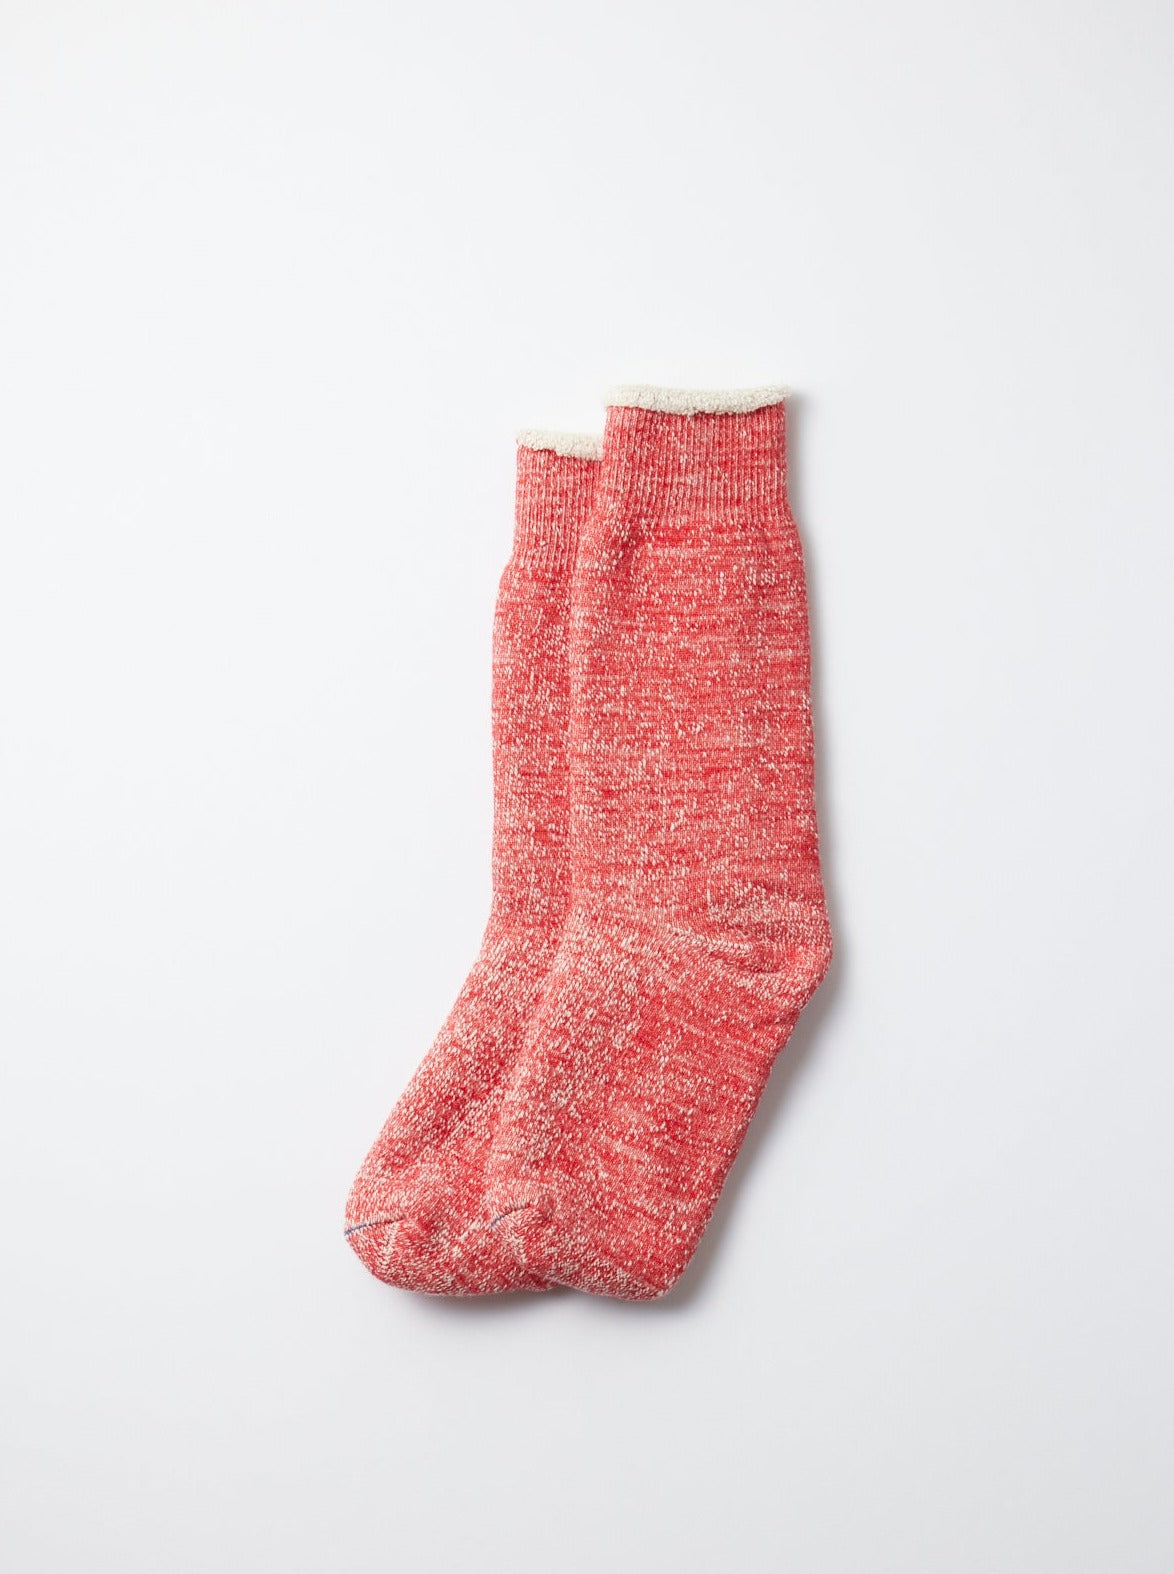 RoToTo - Double Face Merino Wool / Organic Cotton Socks Red